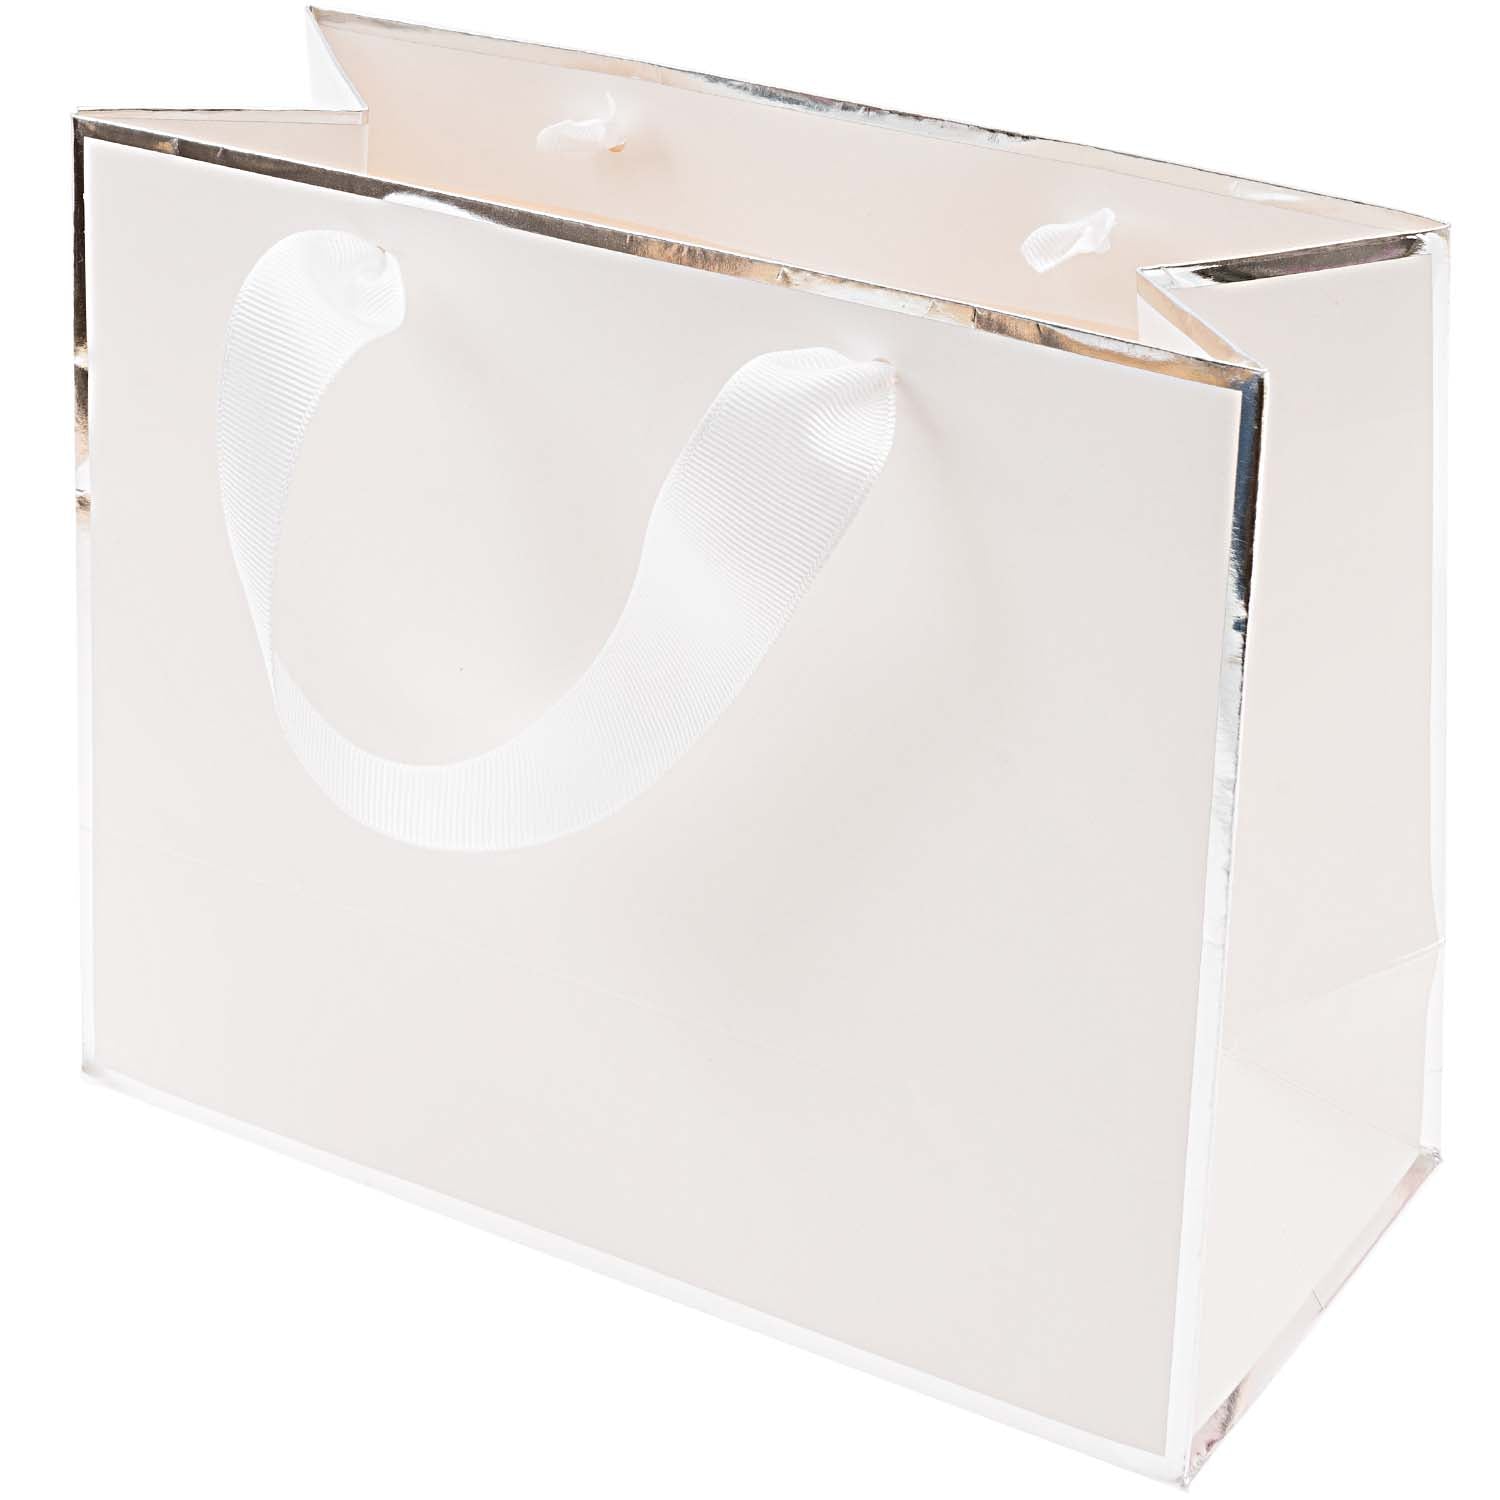 WHITE & SILVER GIFT BAG 22x18cm